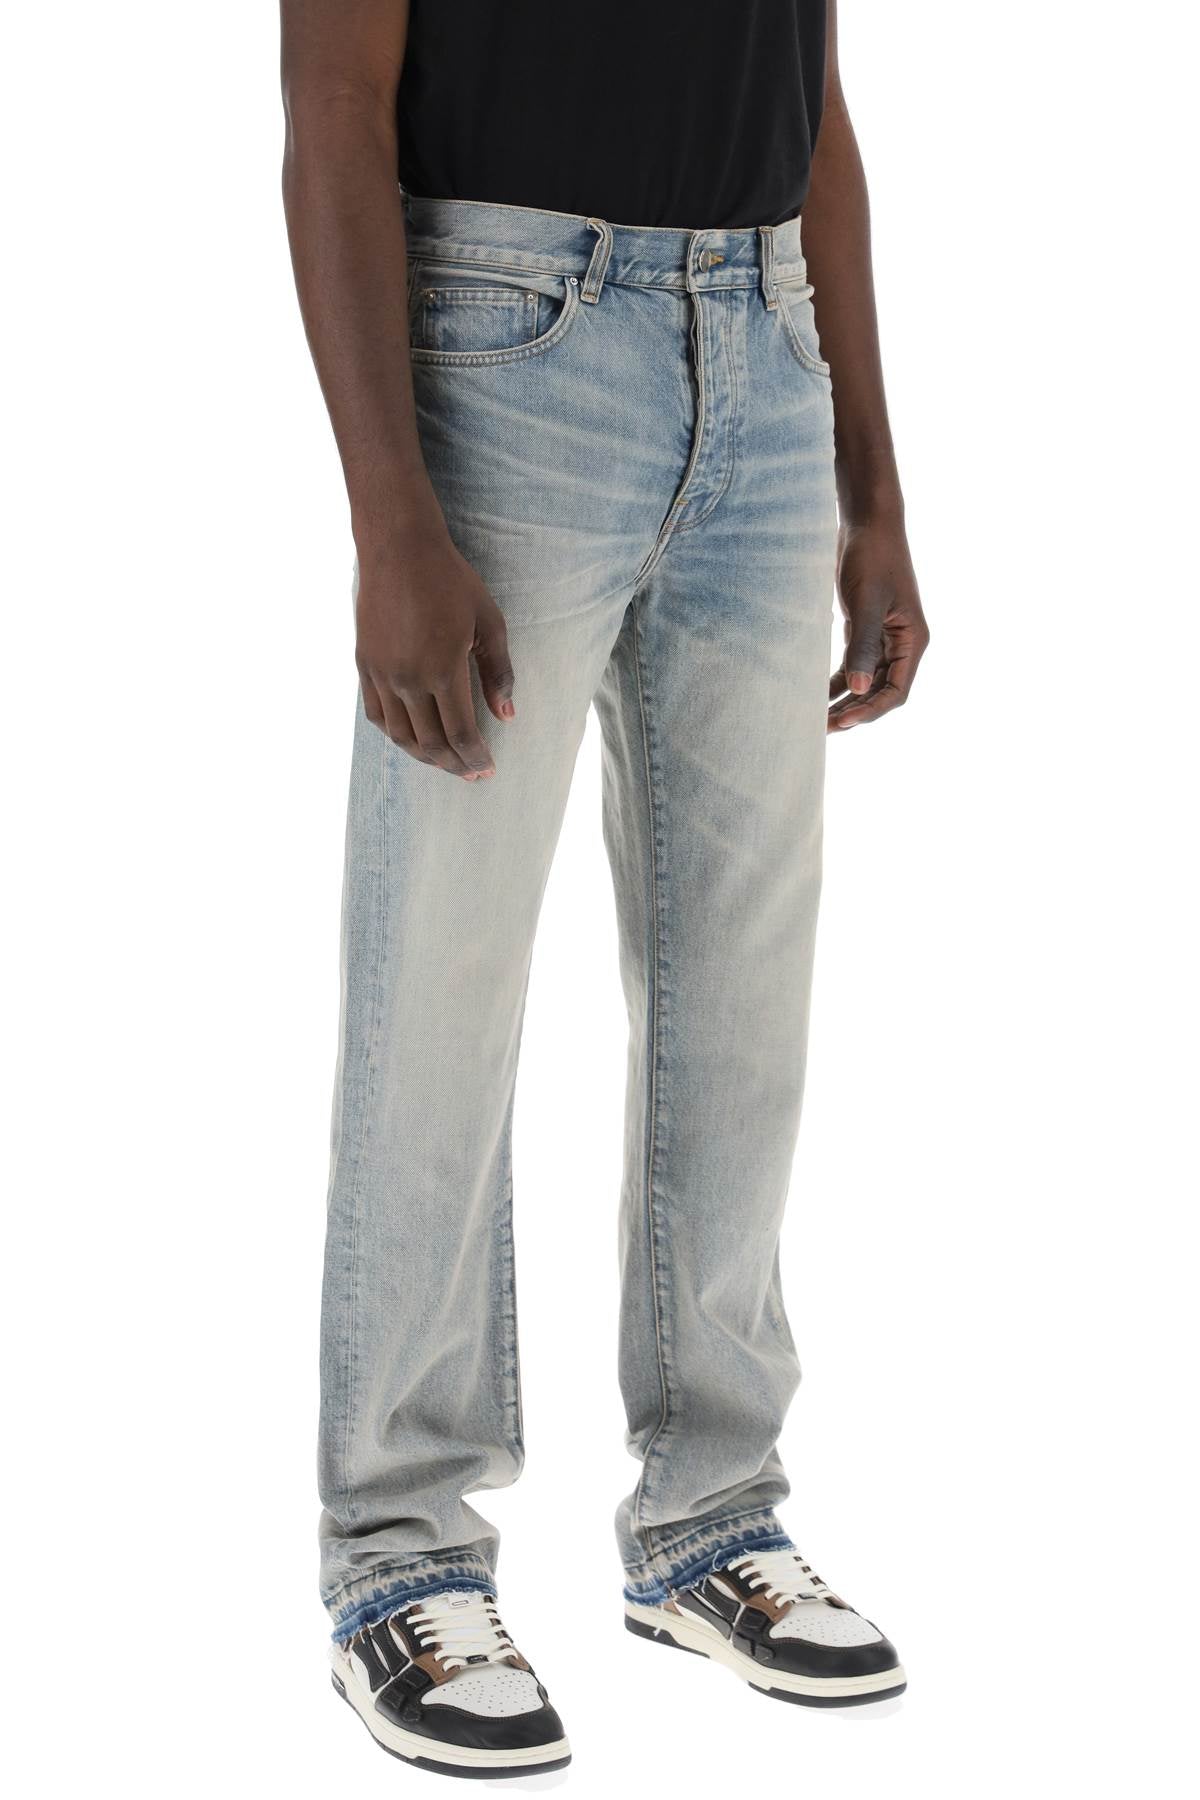 AMIRI Men's Light Blue Straight Cut Loose Jeans